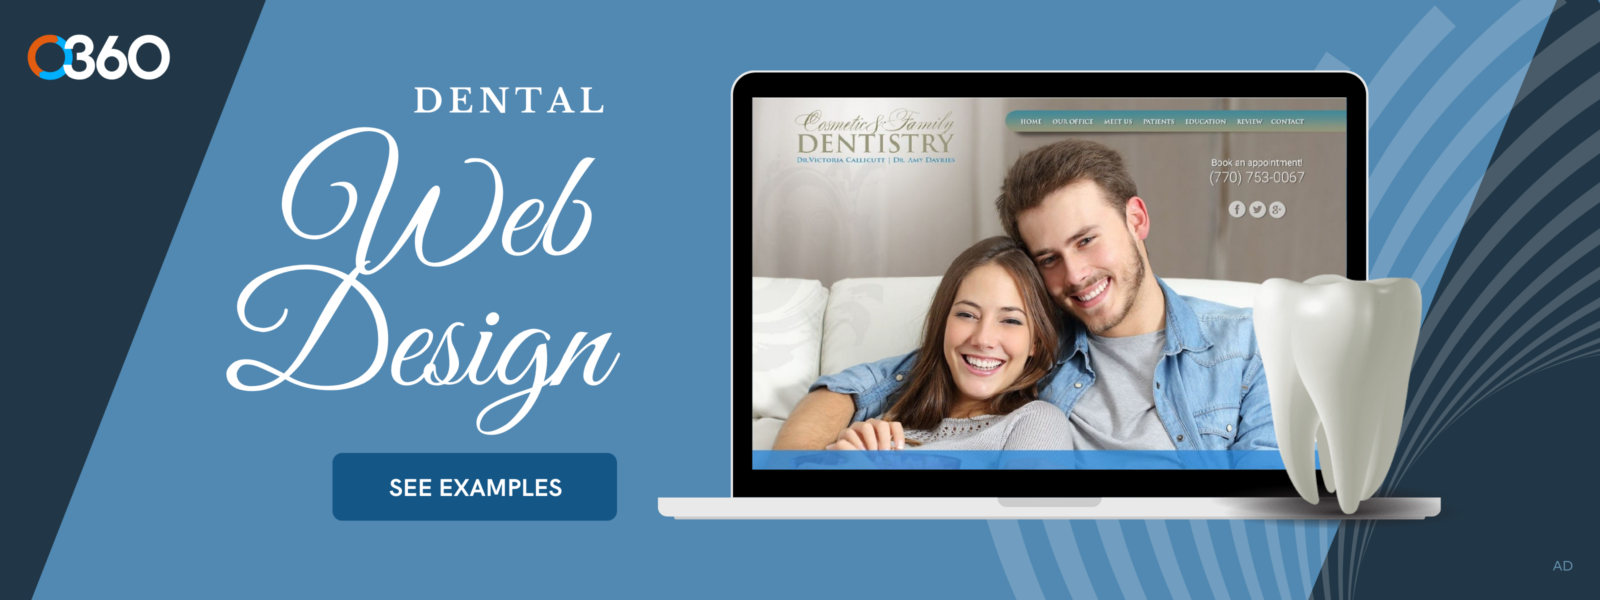 dental web design ad